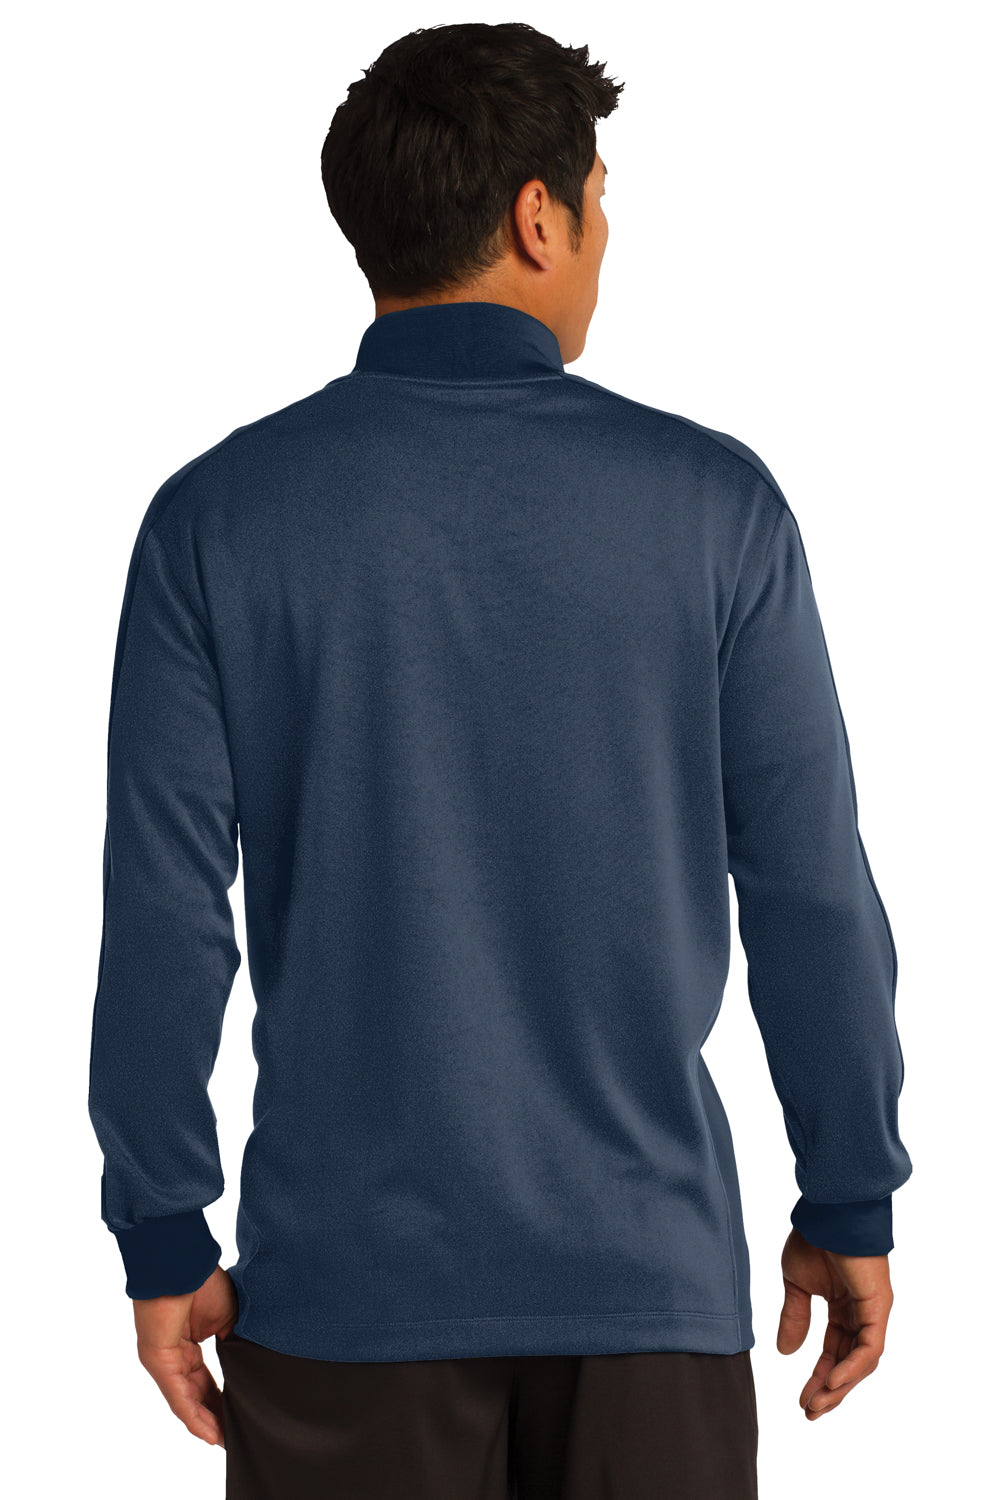 Nike 578673 Mens Dri-Fit Moisture Wicking 1/4 Zip Sweatshirt Heather Navy Blue/Navy Blue Model Back